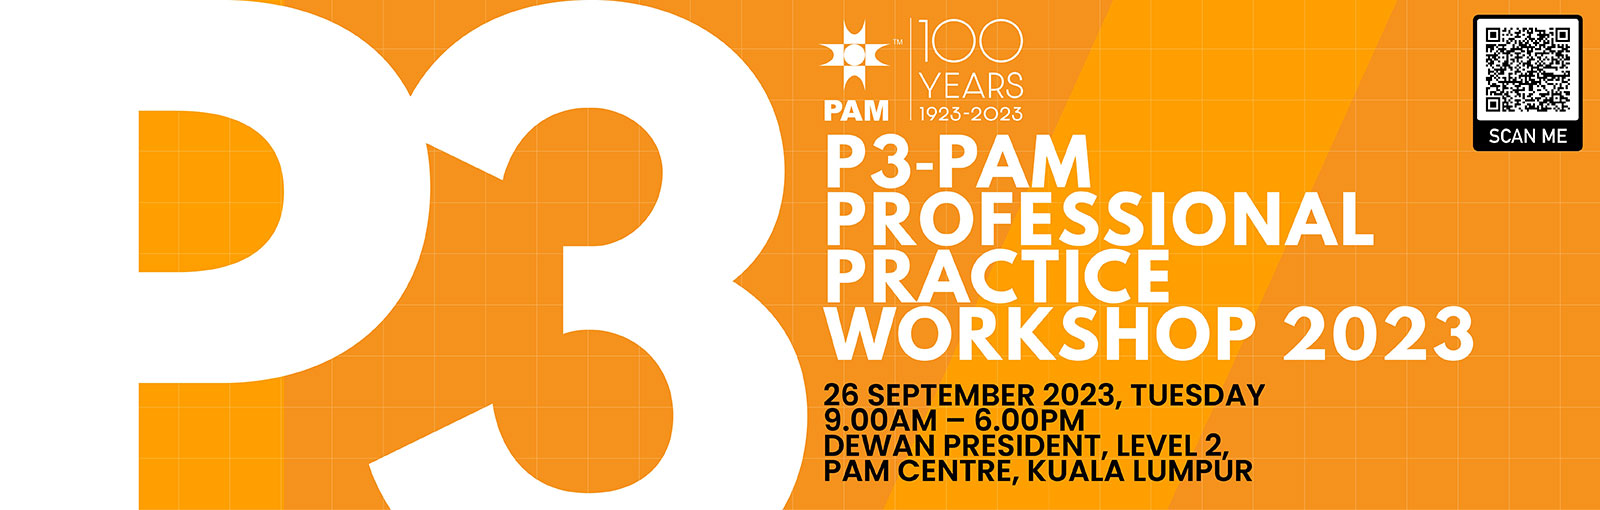 P3-PAM Professional Practice Workshop 2023